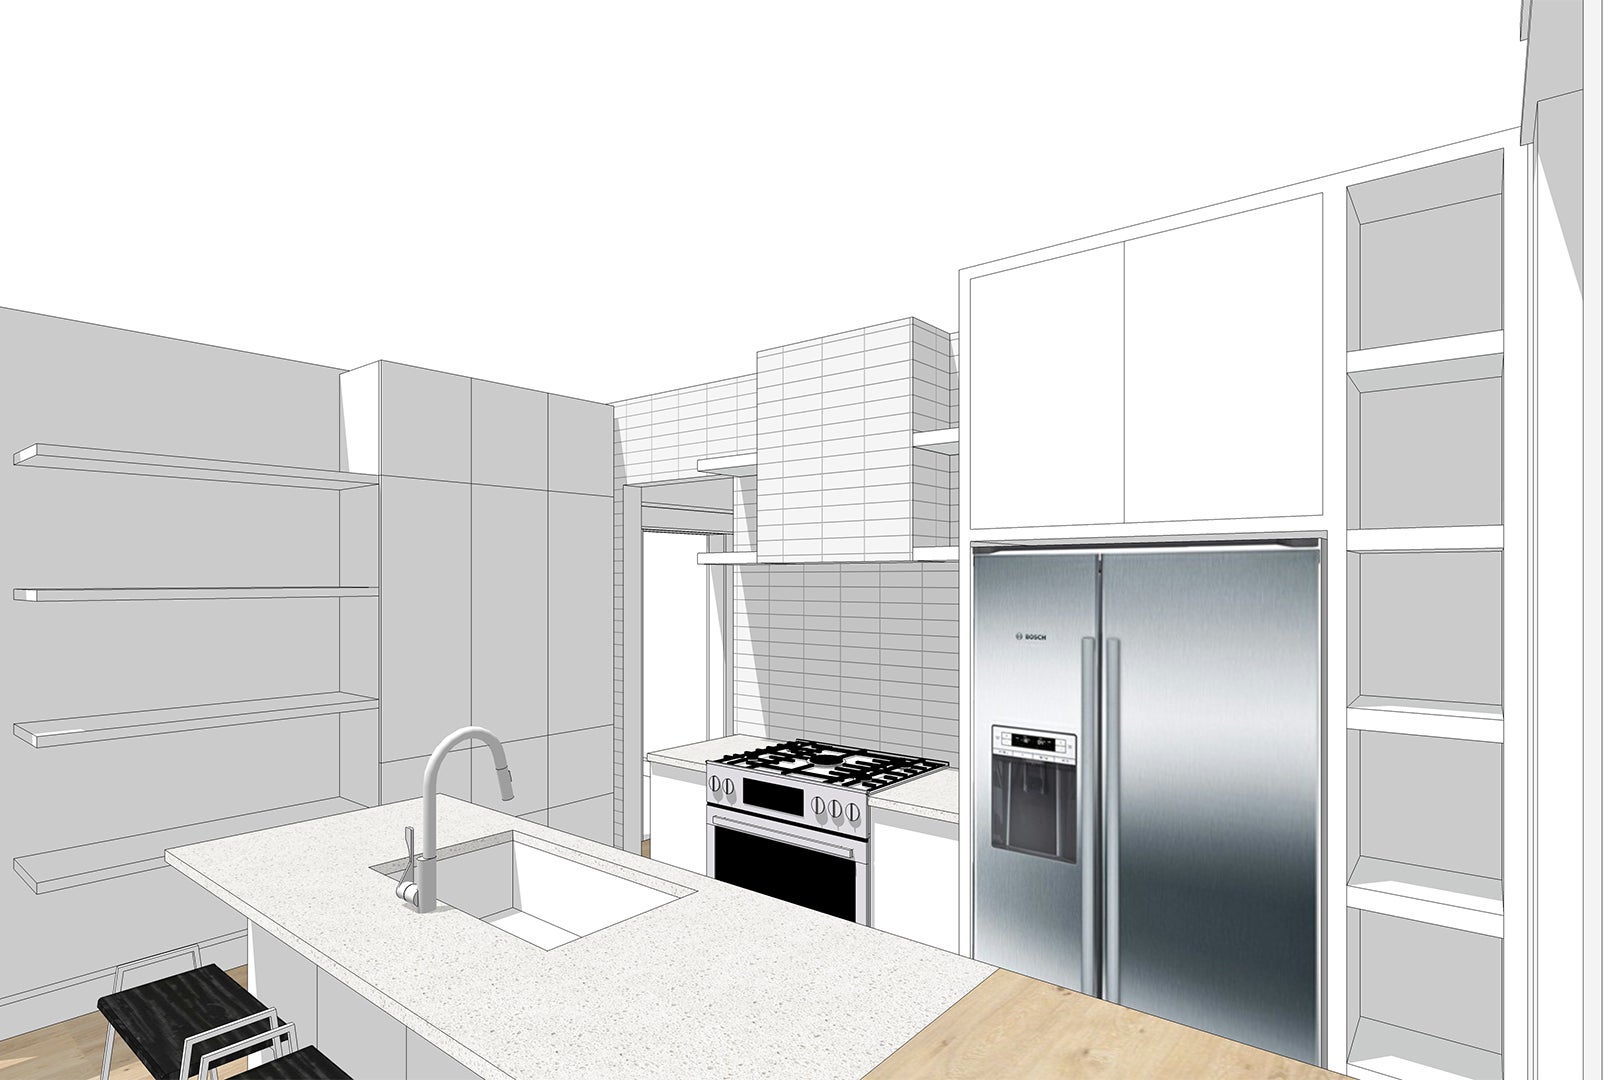 rendering plans of kitchen